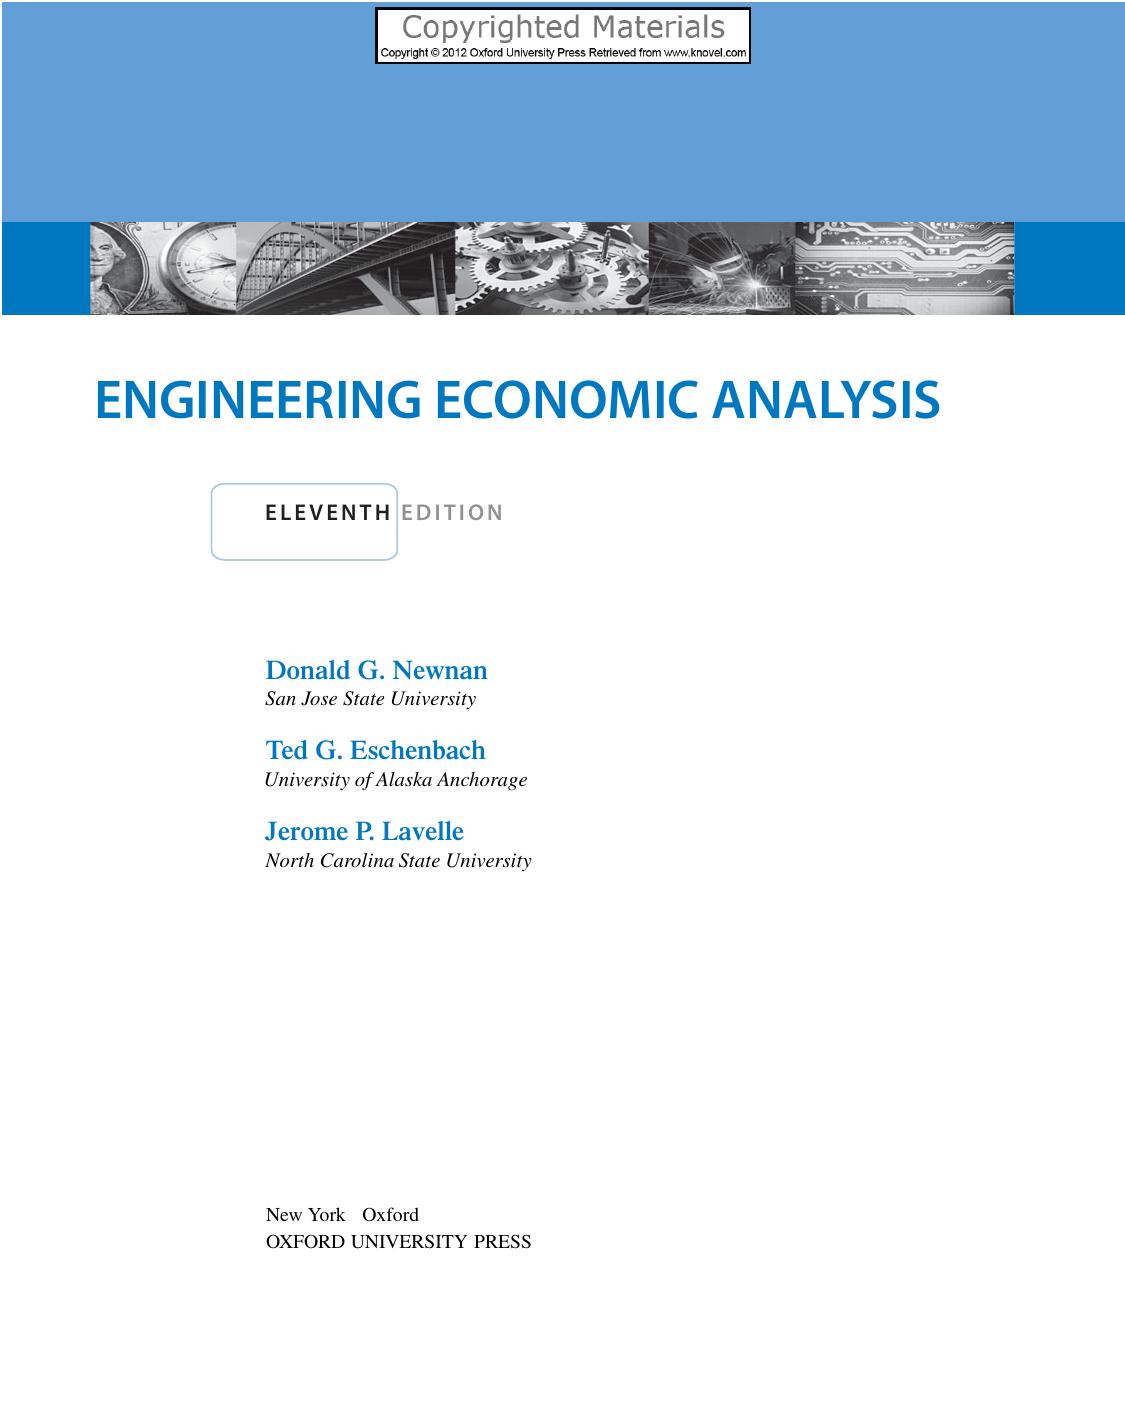 Engineering economic analysis  11th ed. 2012.pdf